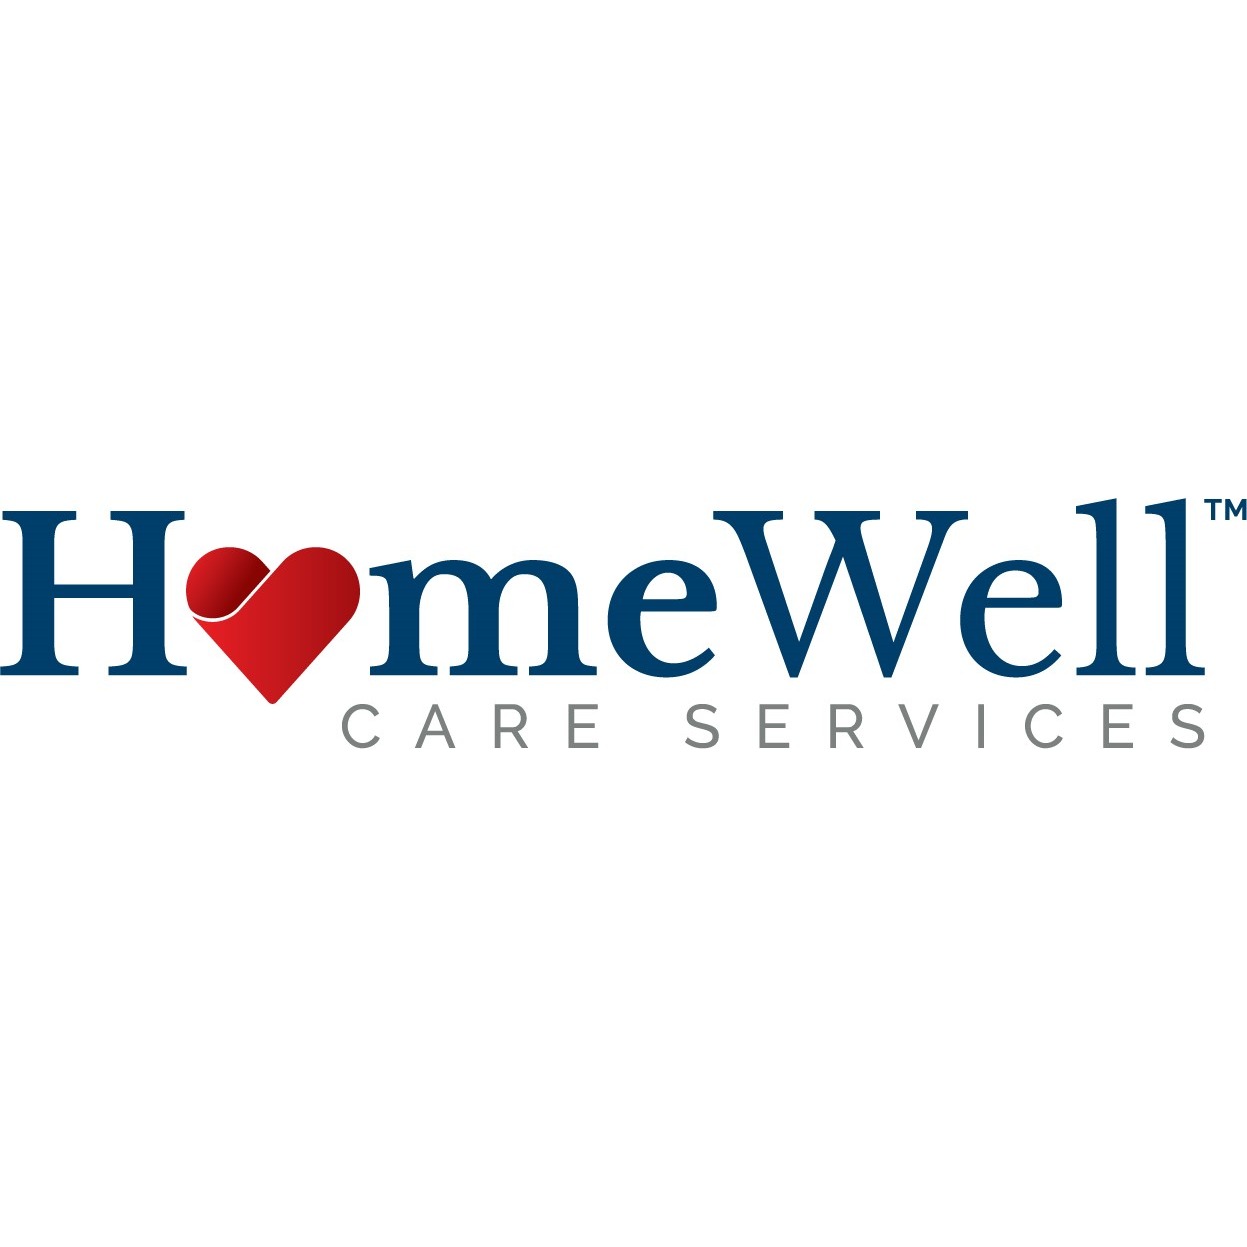 HomeWell Care Services | Financial Advisor in Natick,Massachusetts